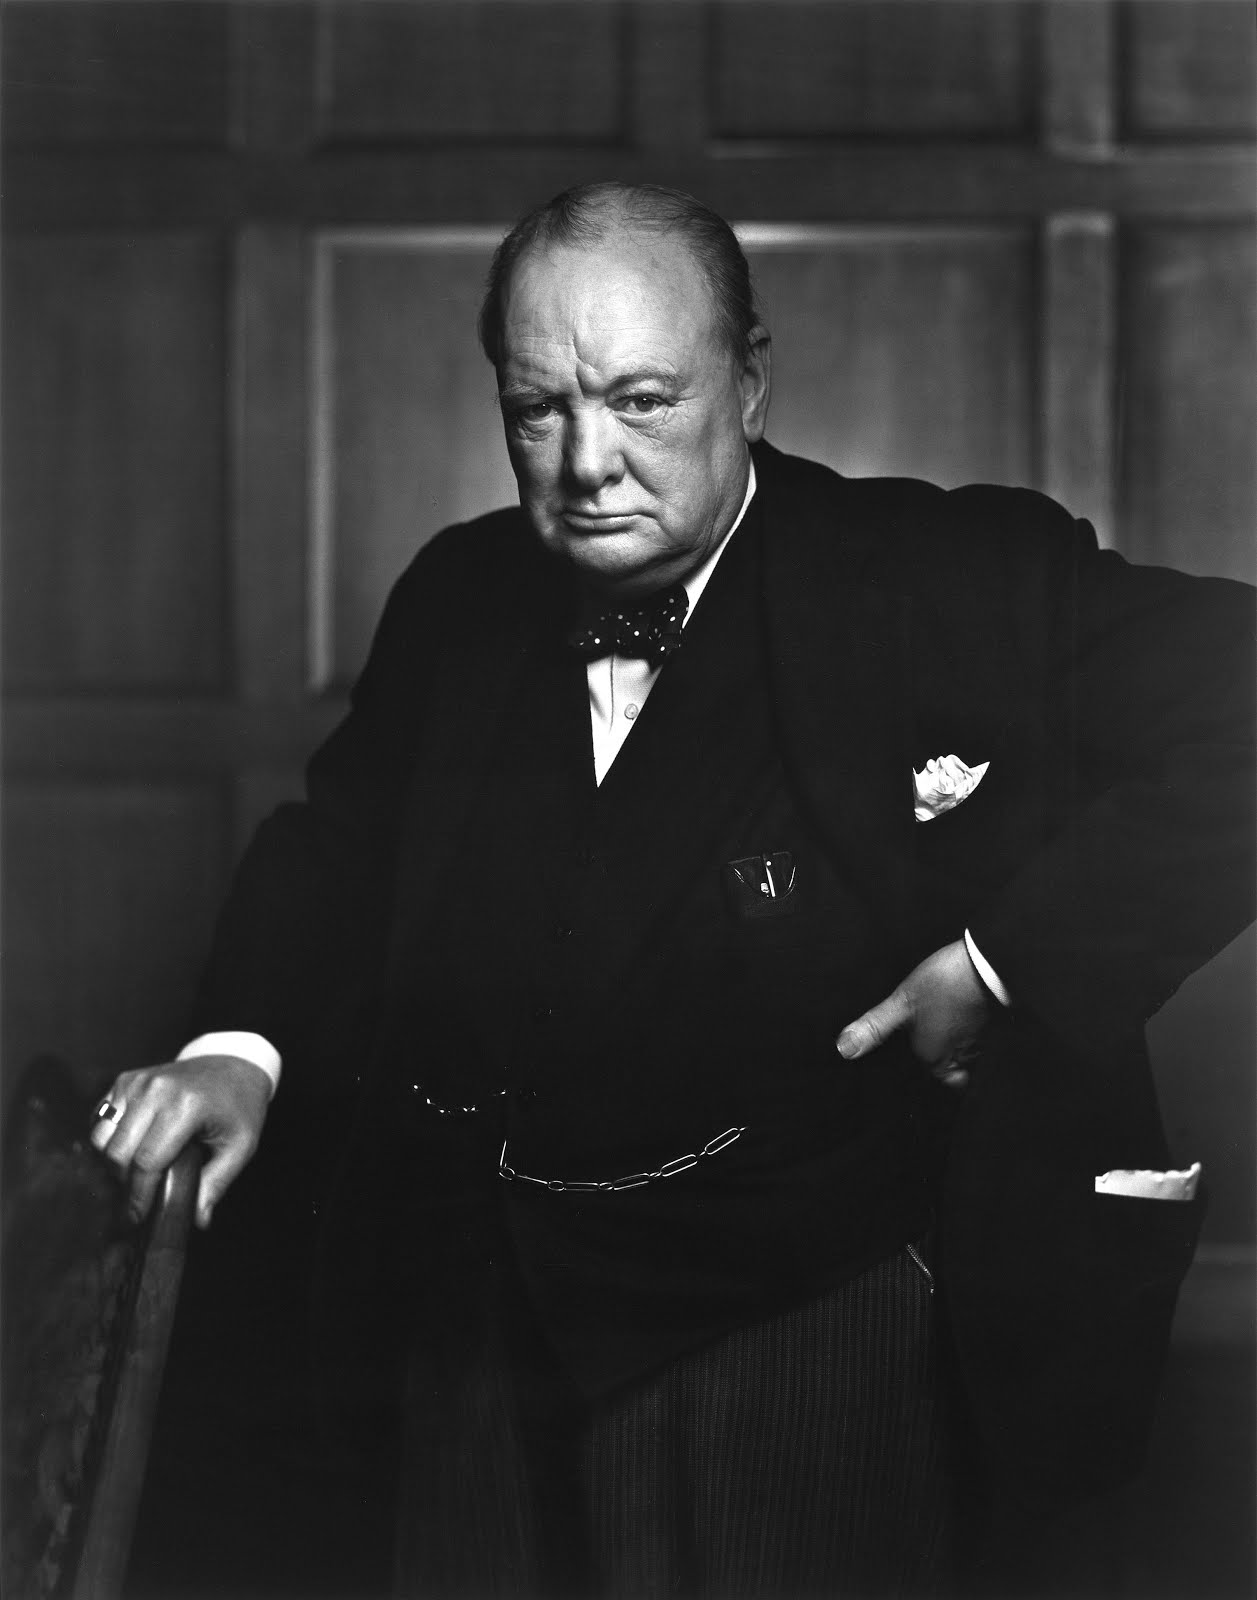 6.-Sir Winston Churchill